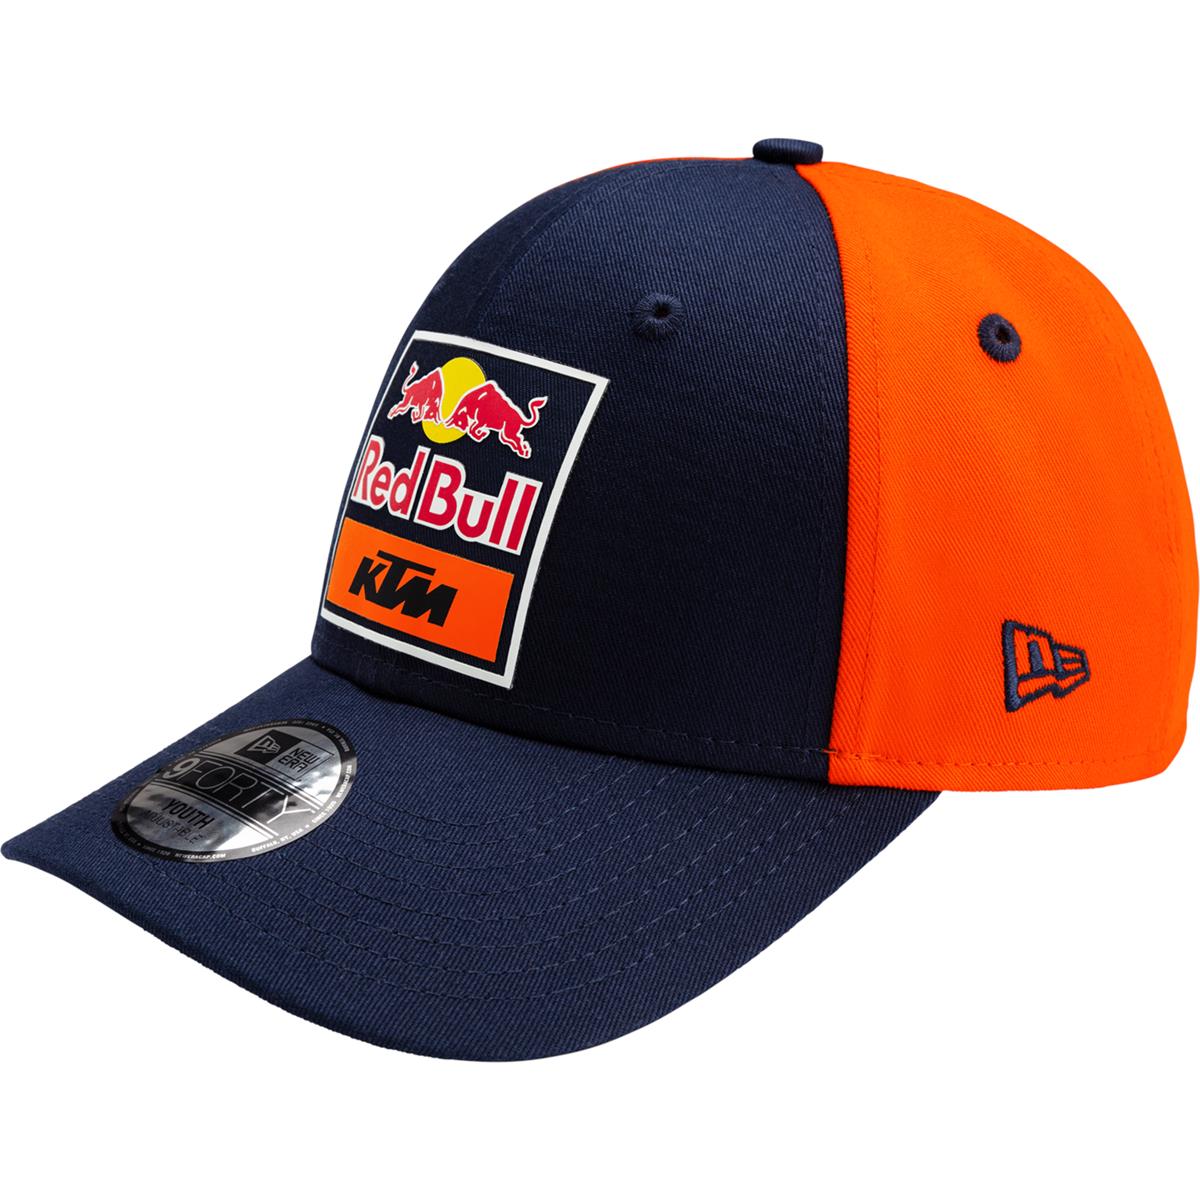 Red Bull Kids Snapback Cap KTM Official Teamline Replica - Curved - Navy/Orange